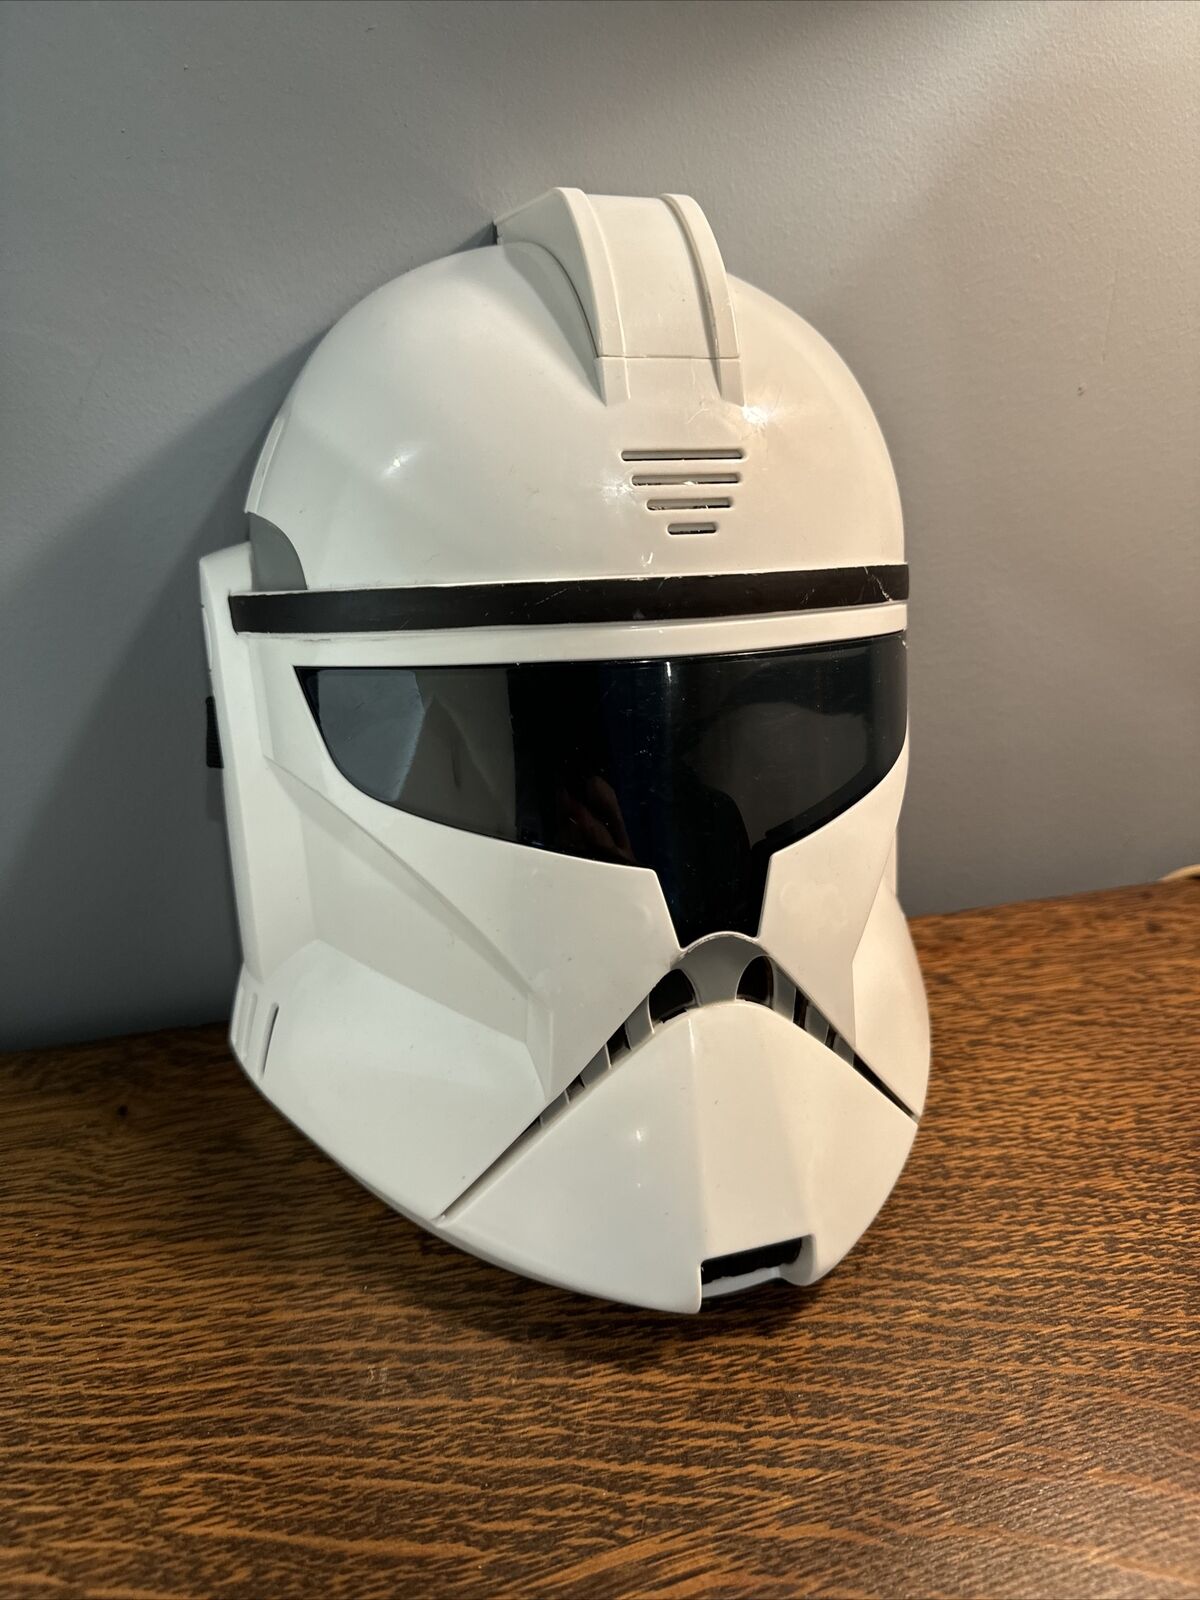 2011 Hasbro Star Wars Clone Trooper Talking Mask Tested